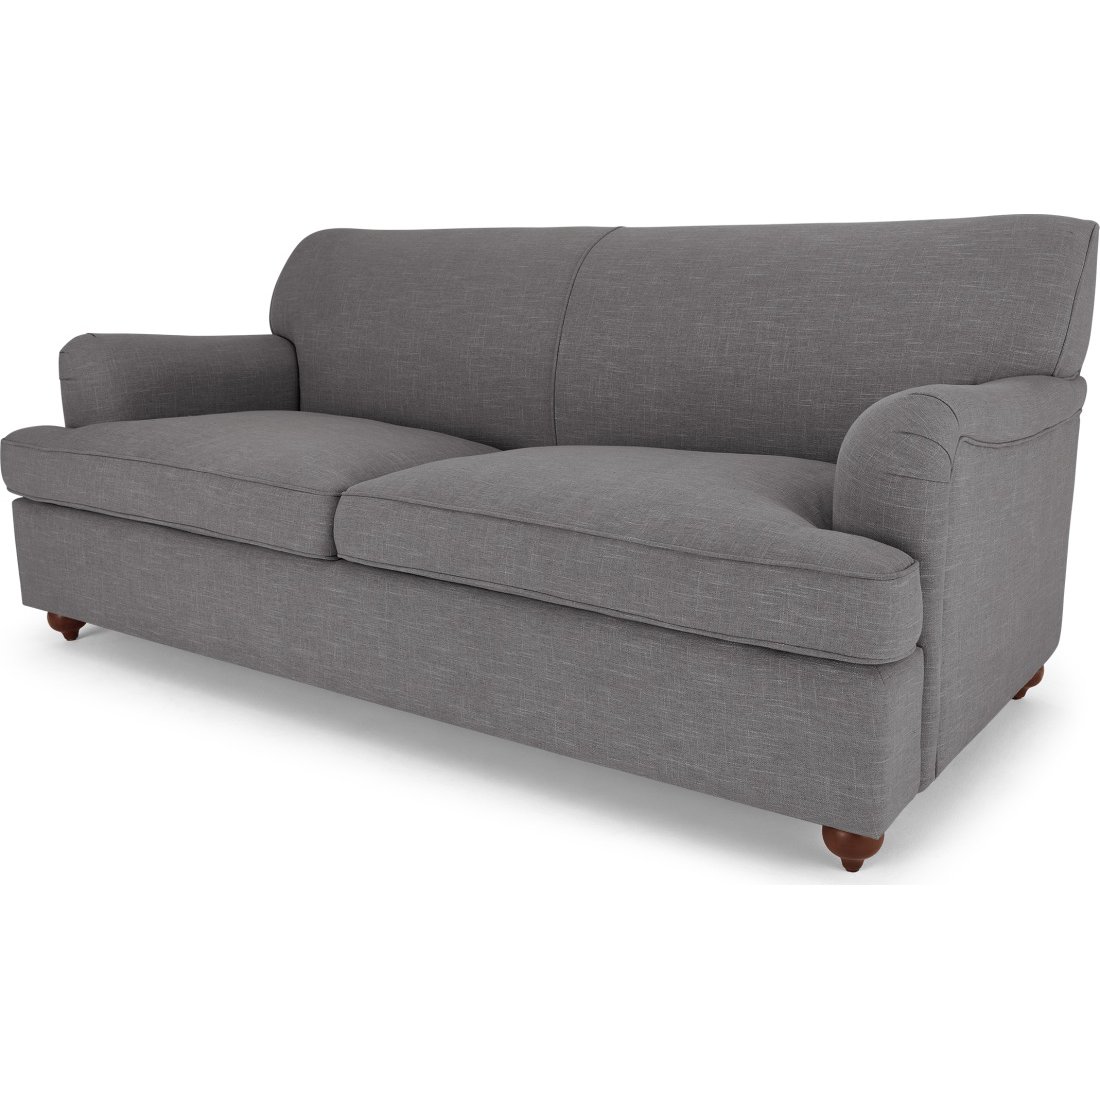 Orson 3 Seater Sofa Bed, Graphite Grey